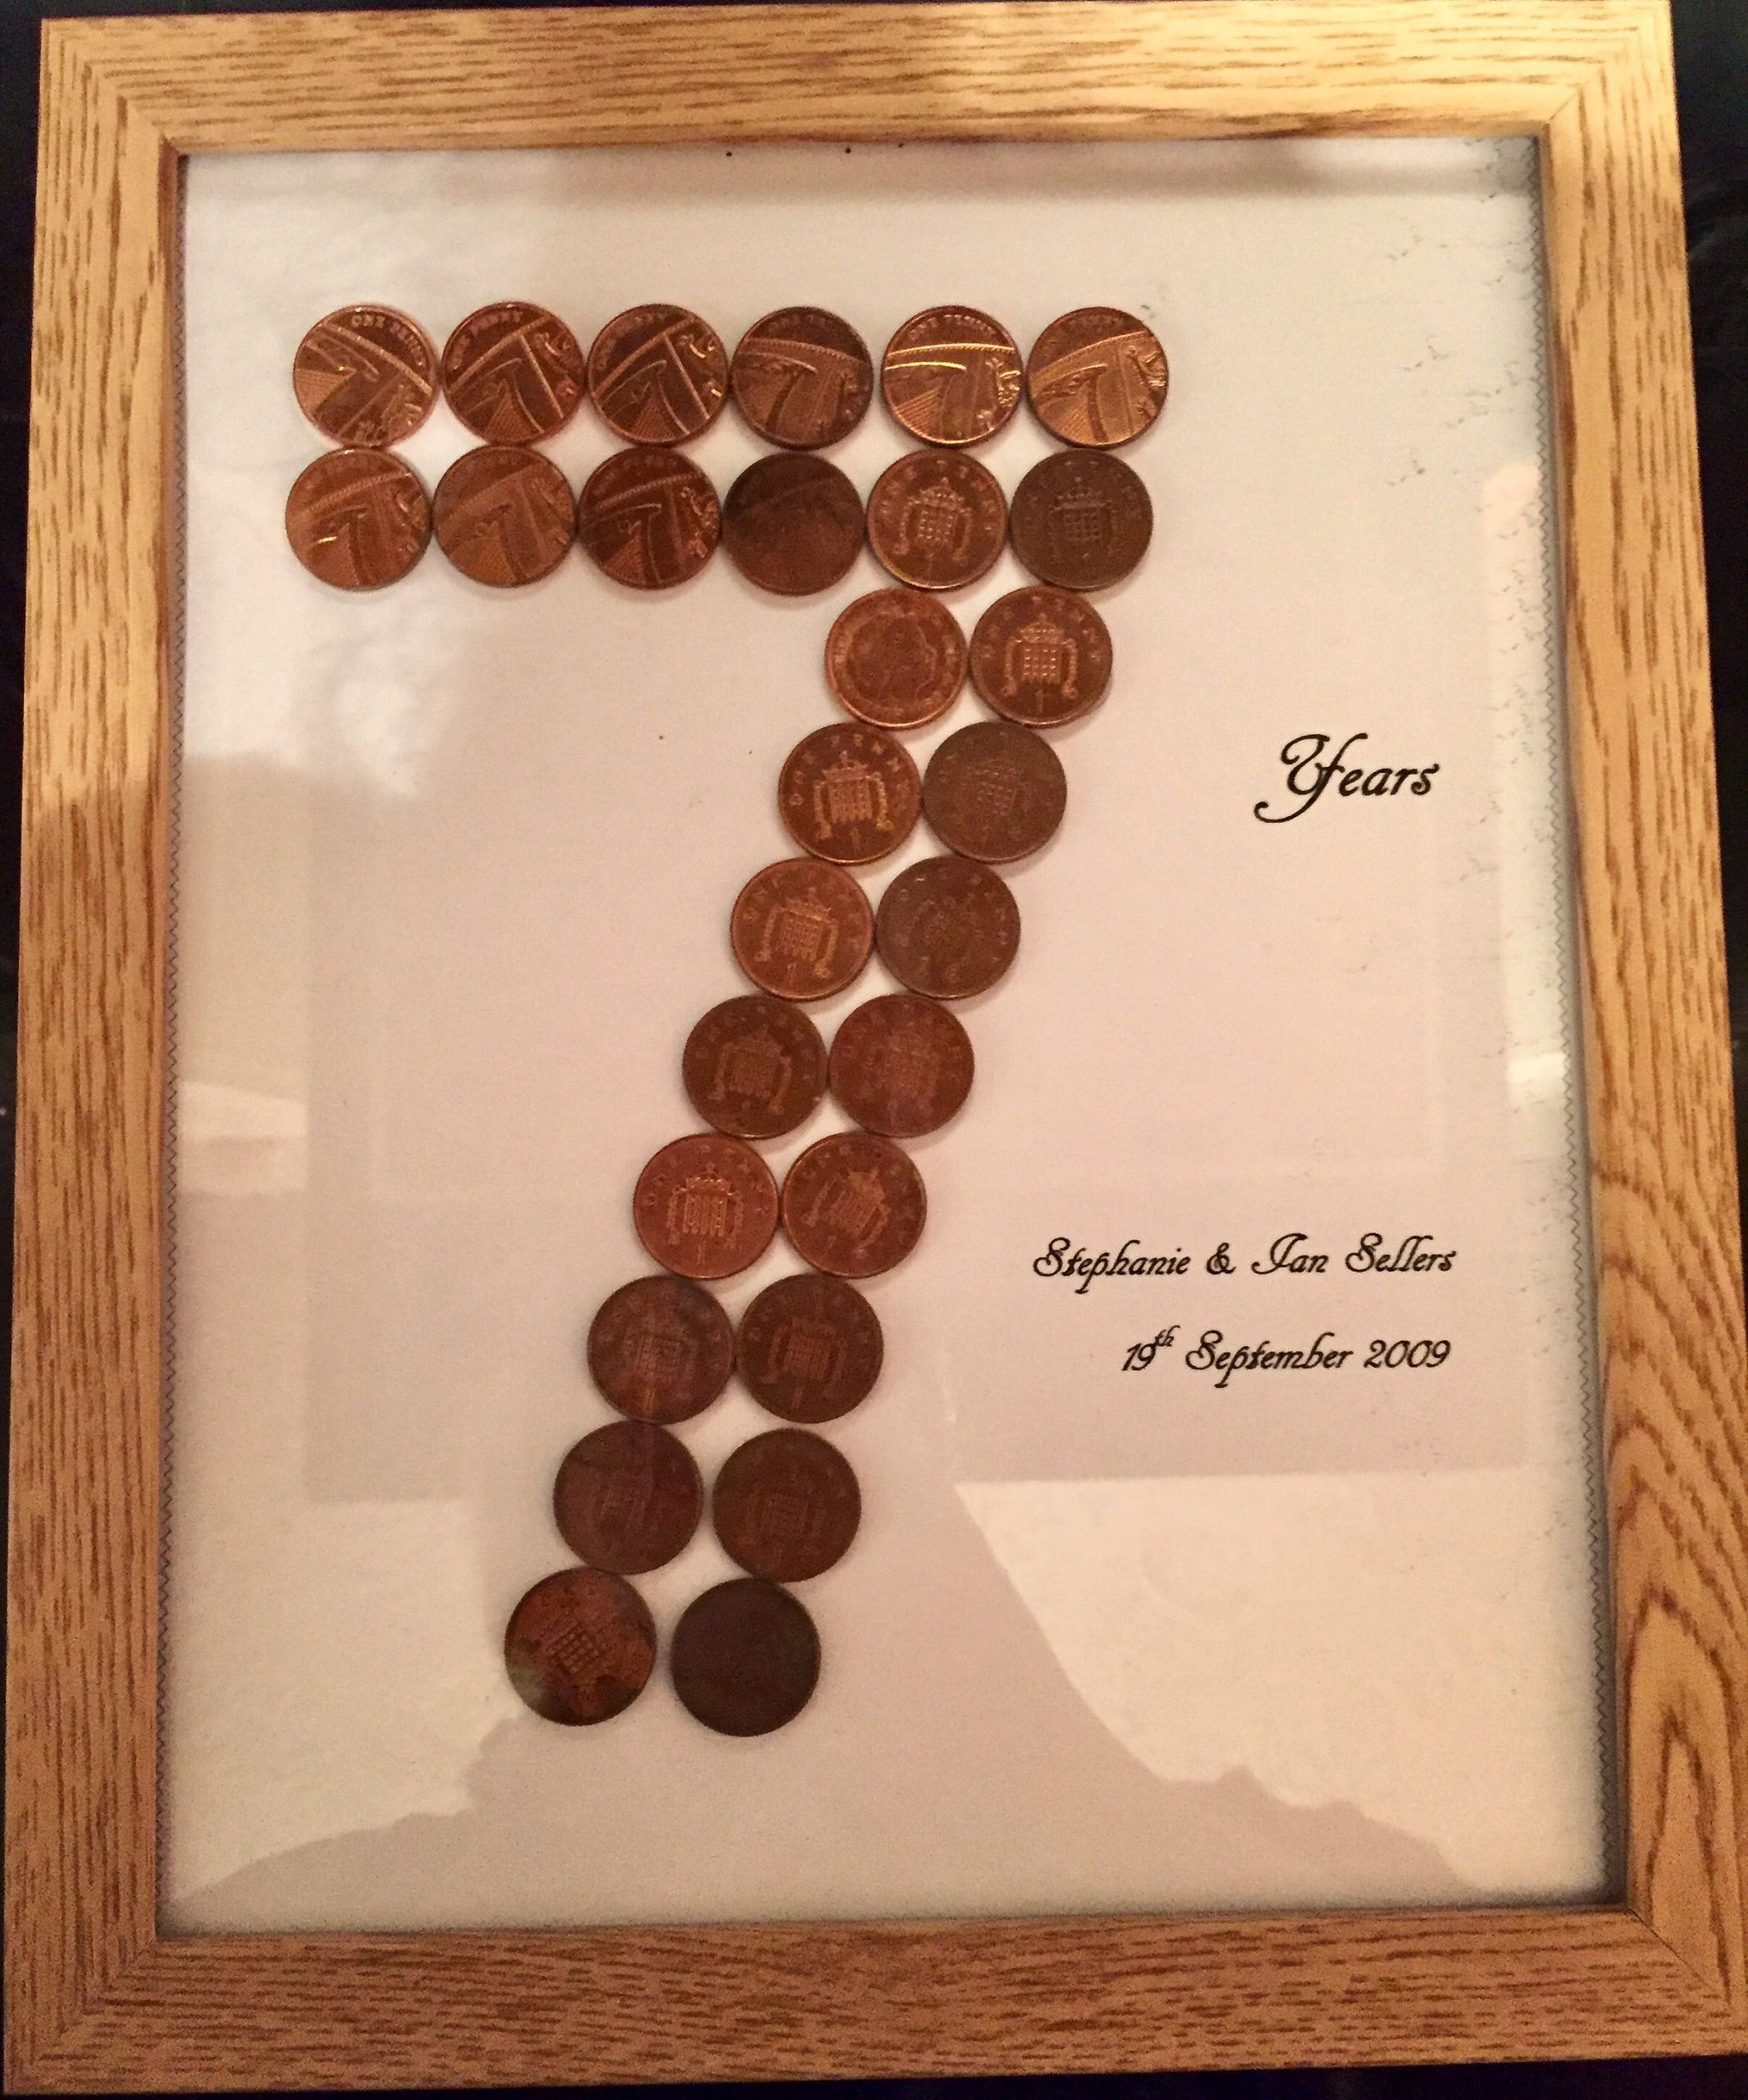 7th wedding anniversary (copper) gift